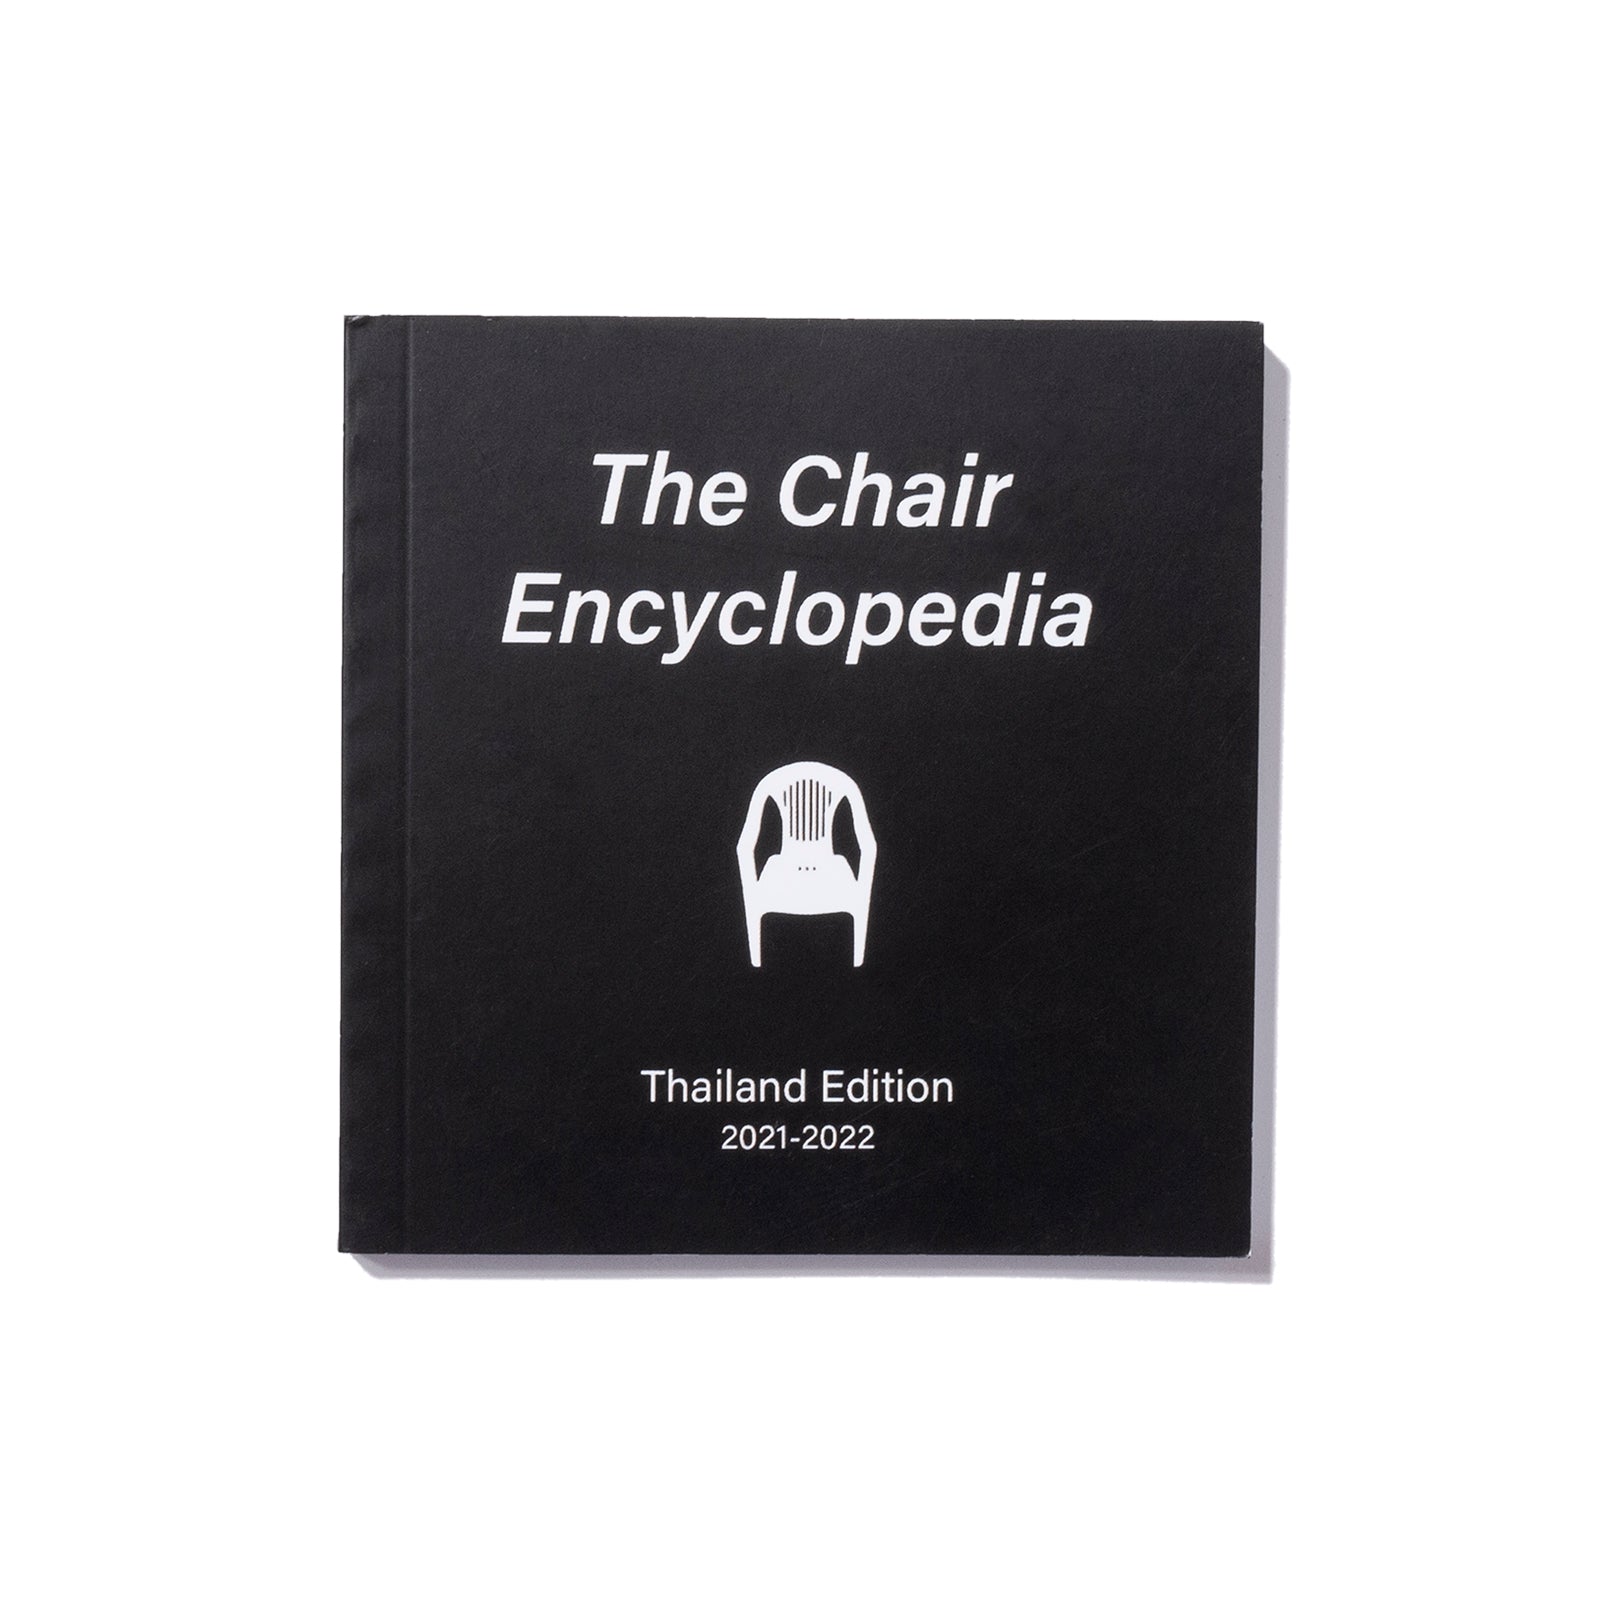 The Chair Encyclopedia Thailand Edition